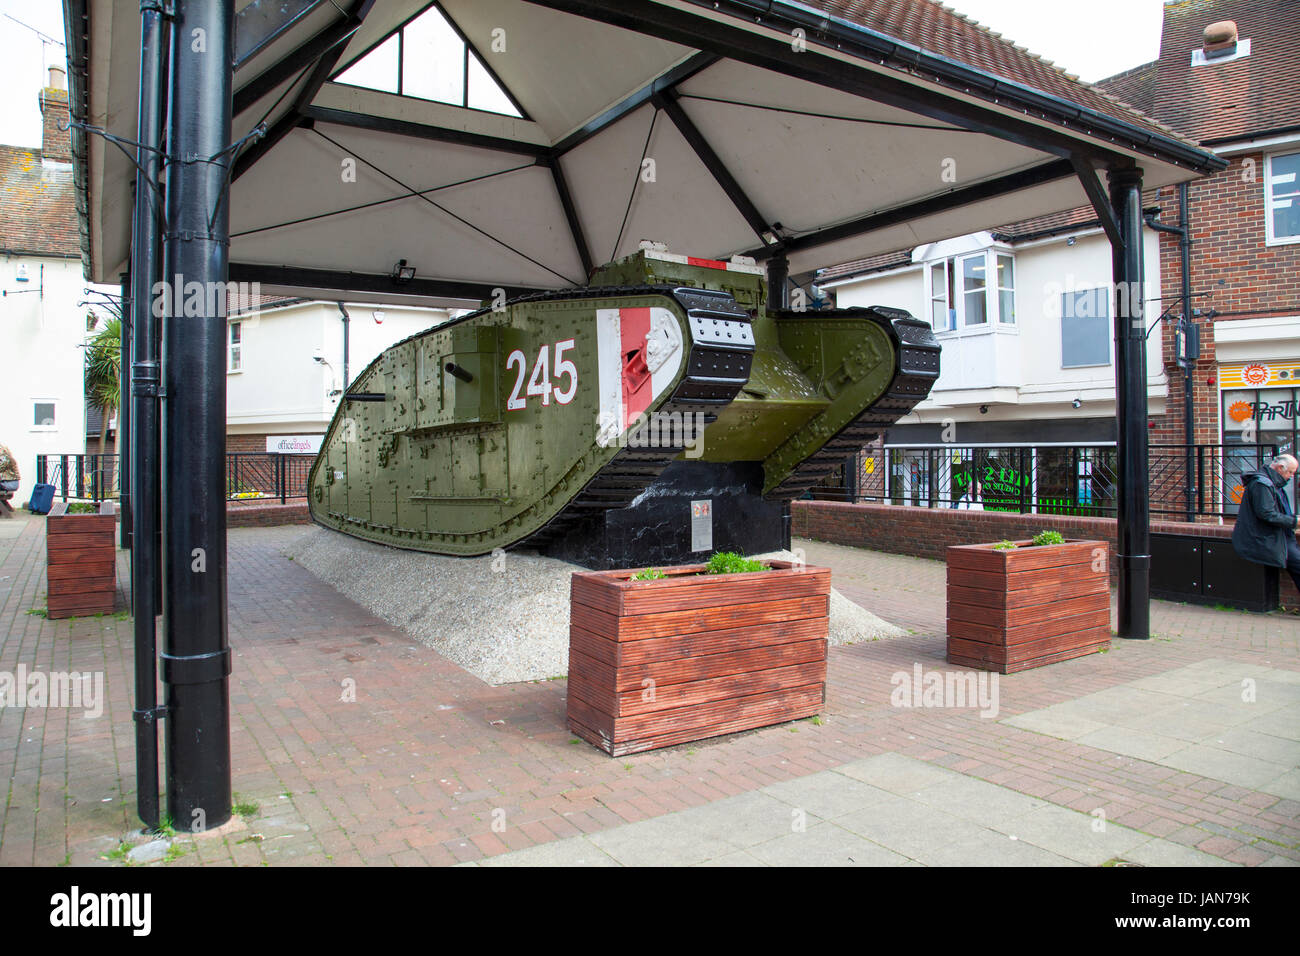 British mark IV 'female' tank, No 245, Ashford high street town centre, Kent, uk Stock Photo